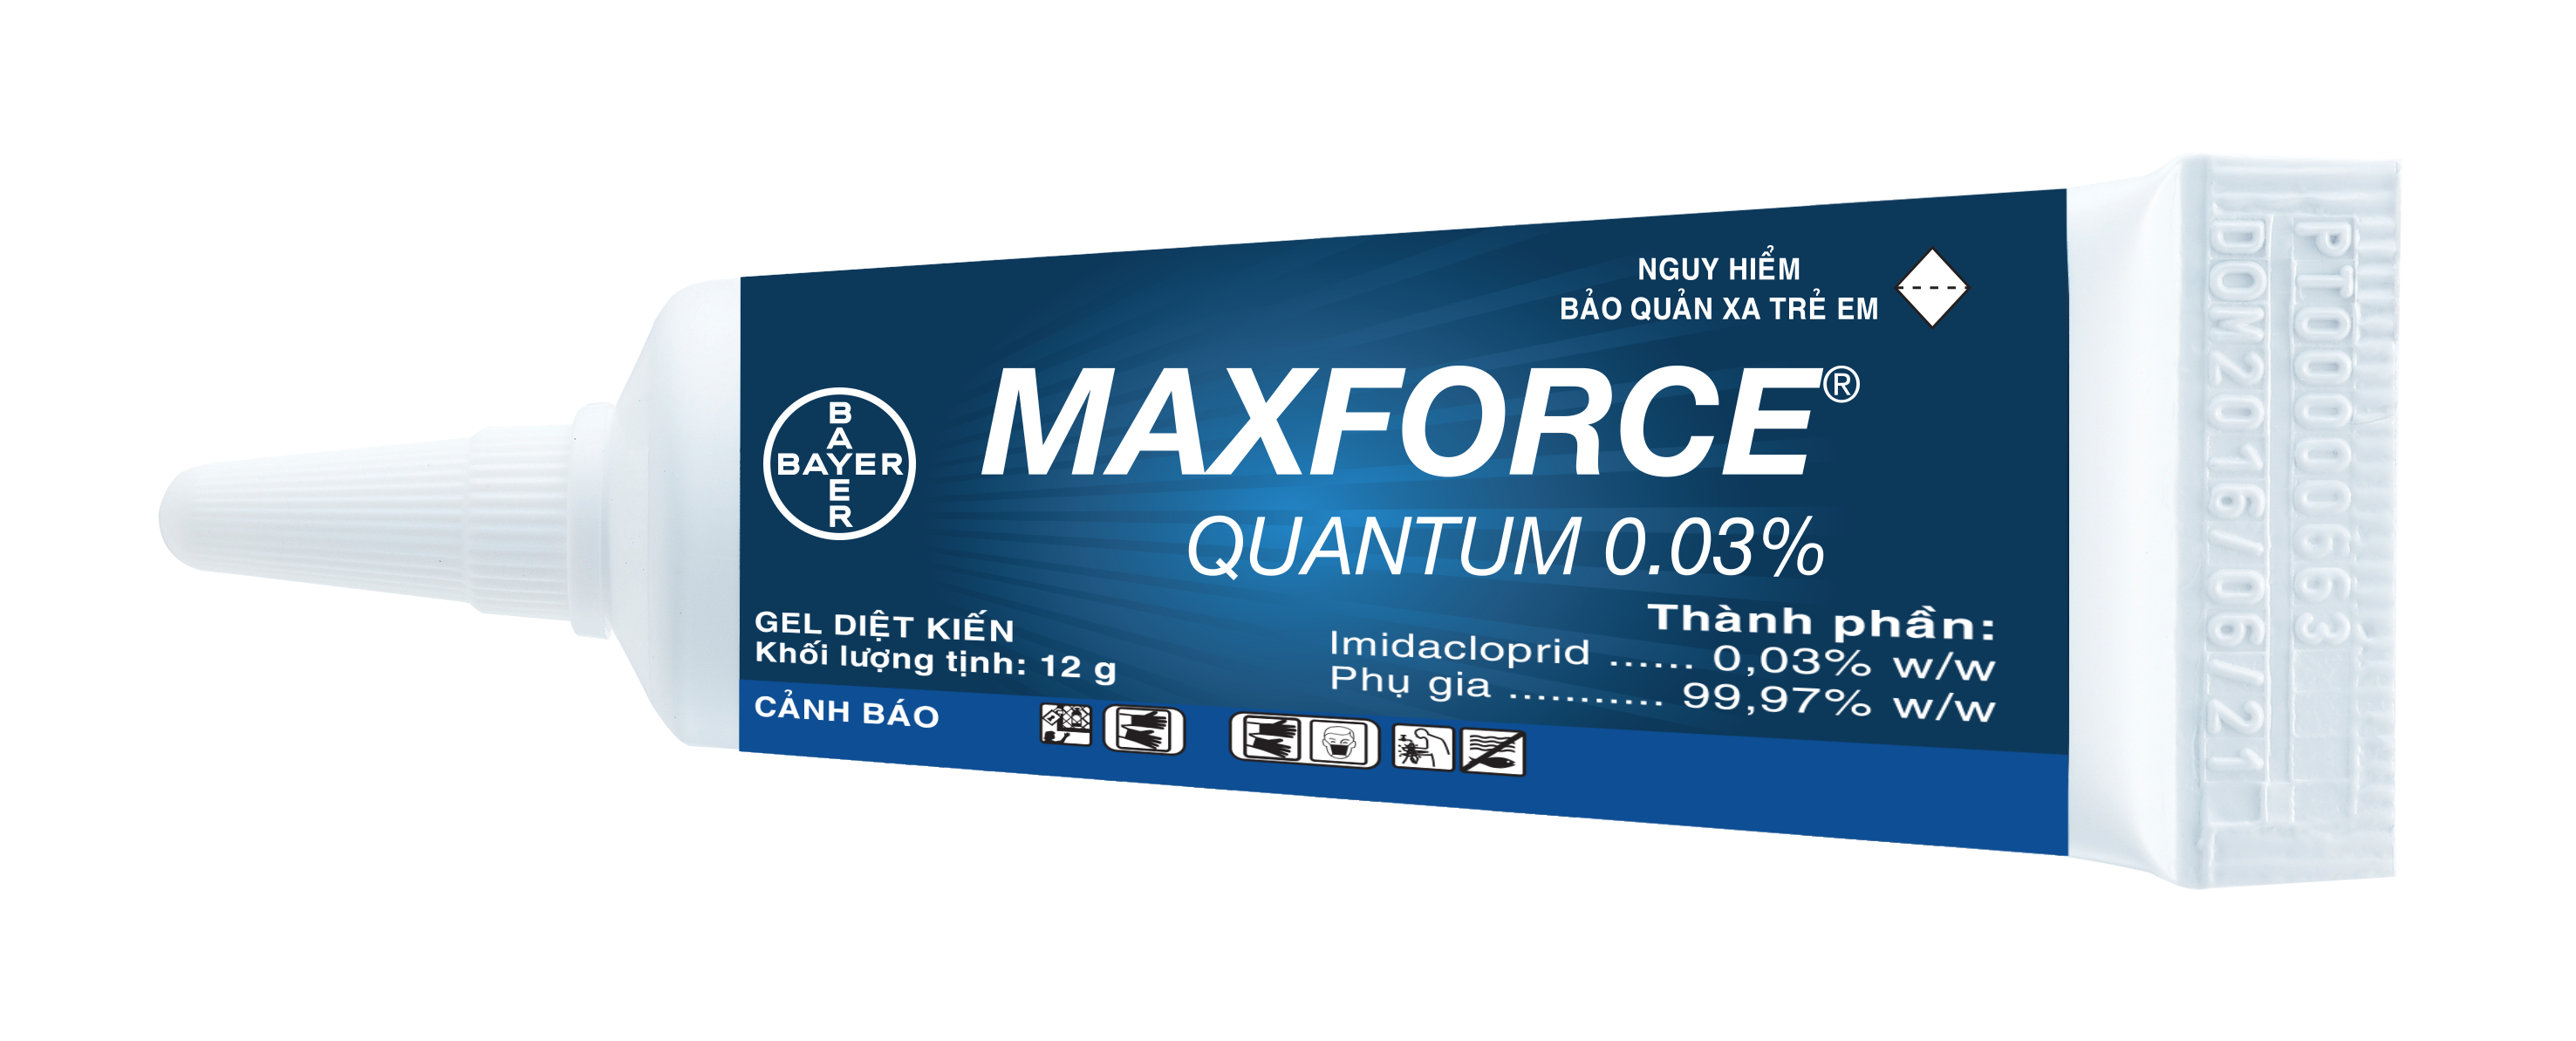 Diệt kiến dạng Gel Bayer Maxforce Quantum 0.03% (12g)